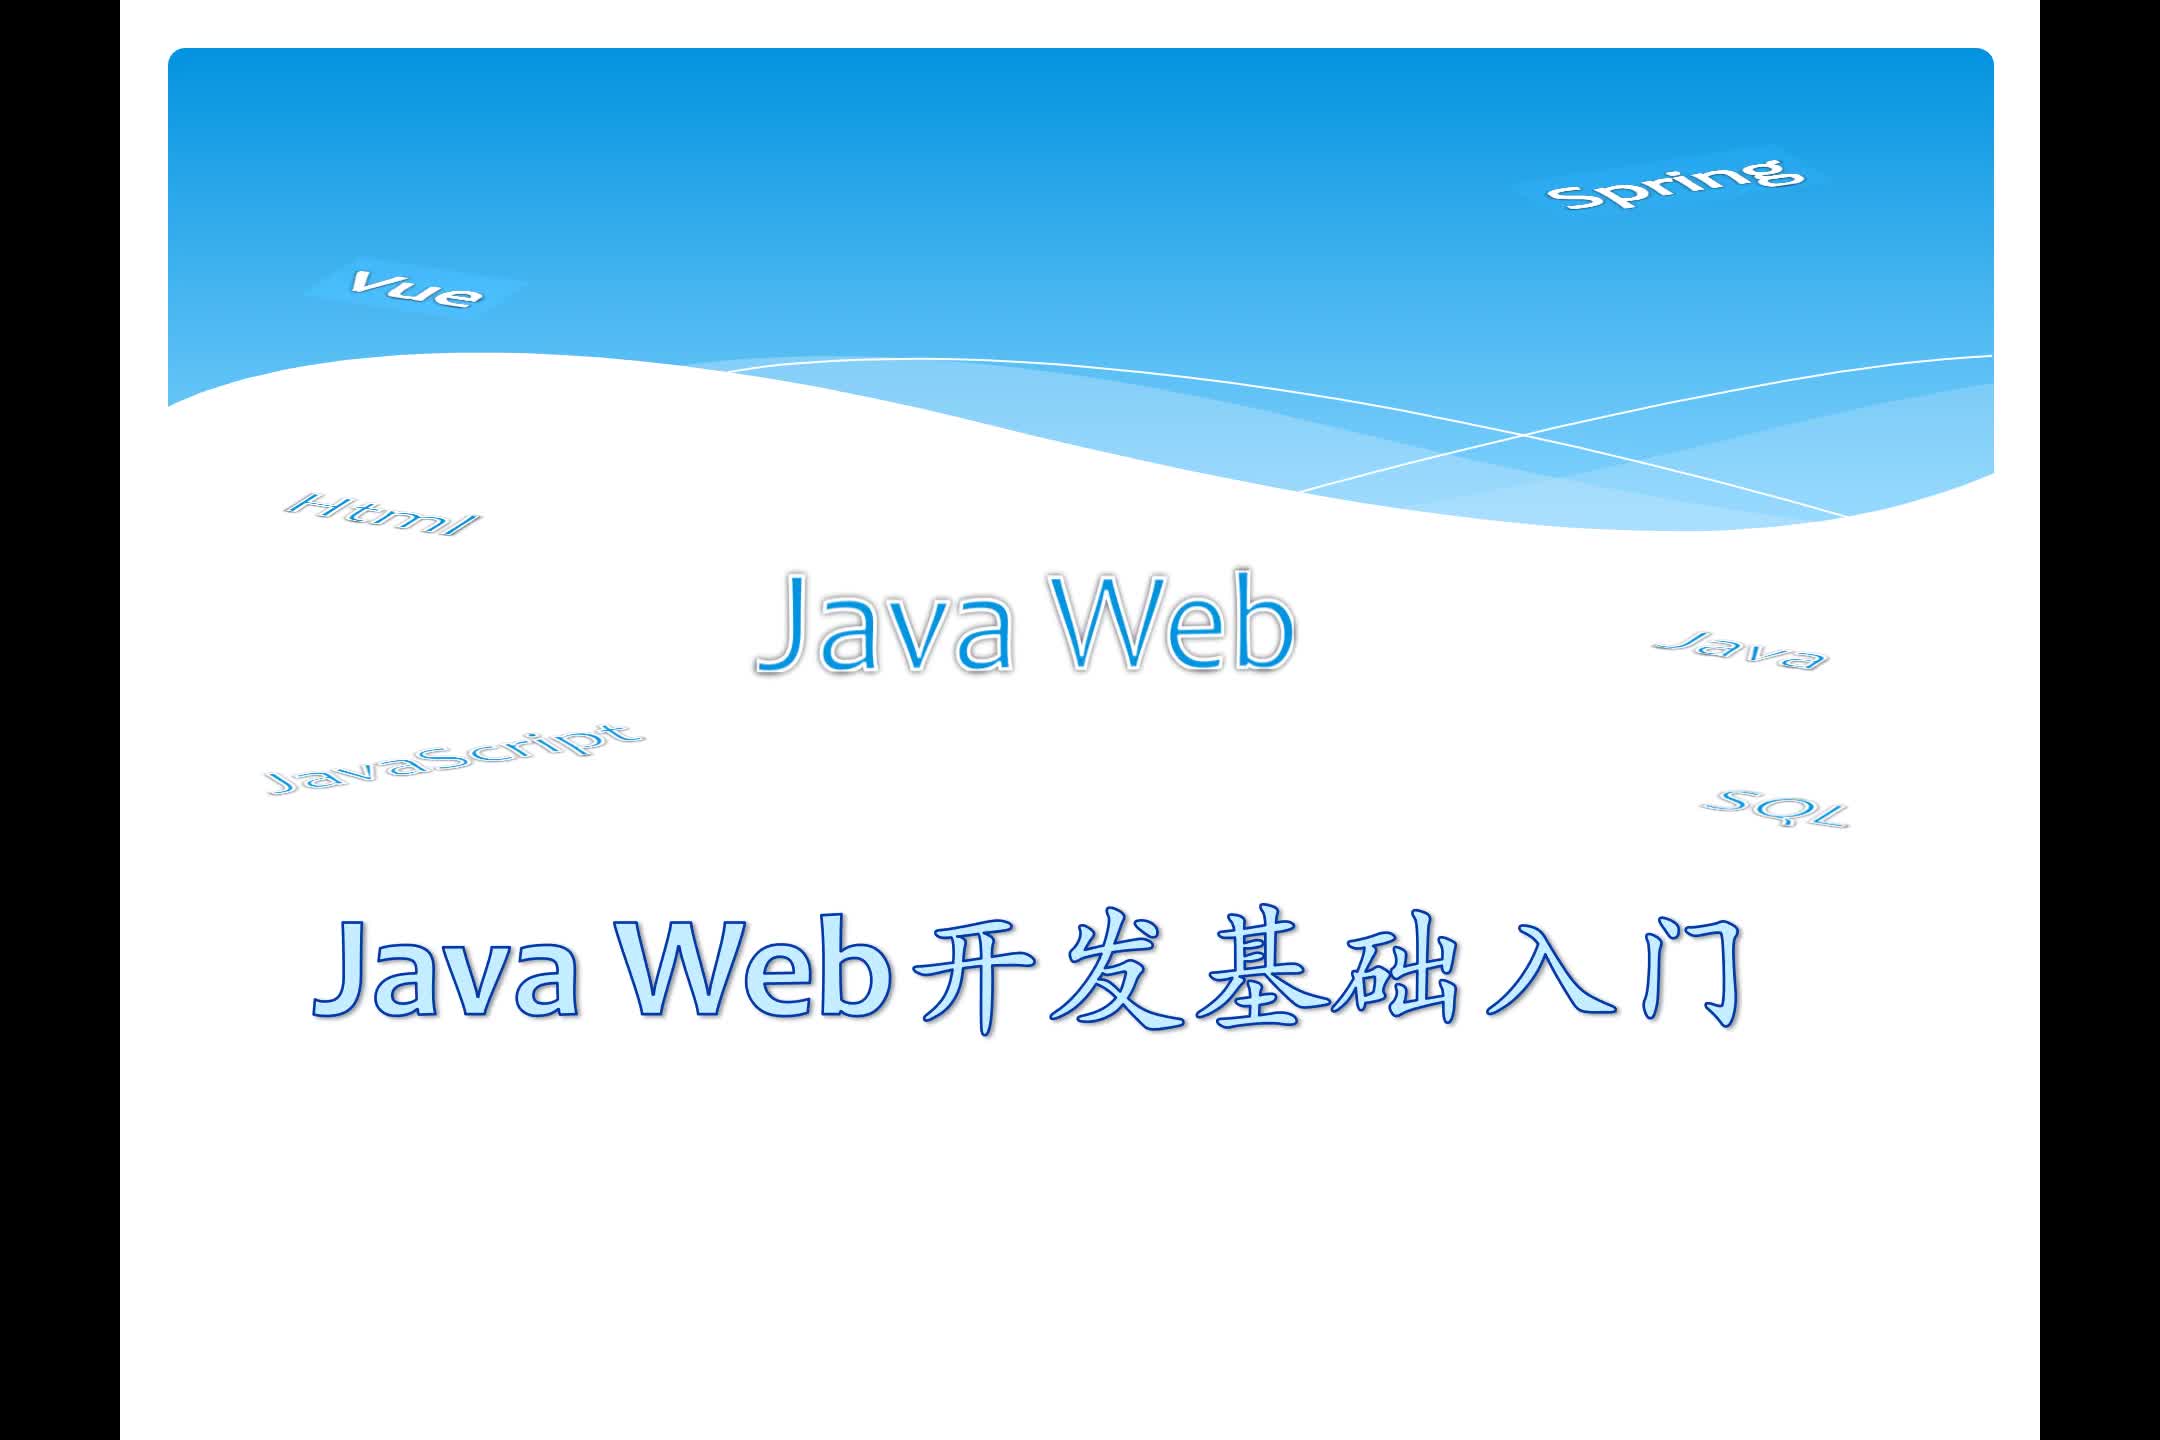 JavaWeb/JSP/Servlet/JDBC开发基础入门视频教程